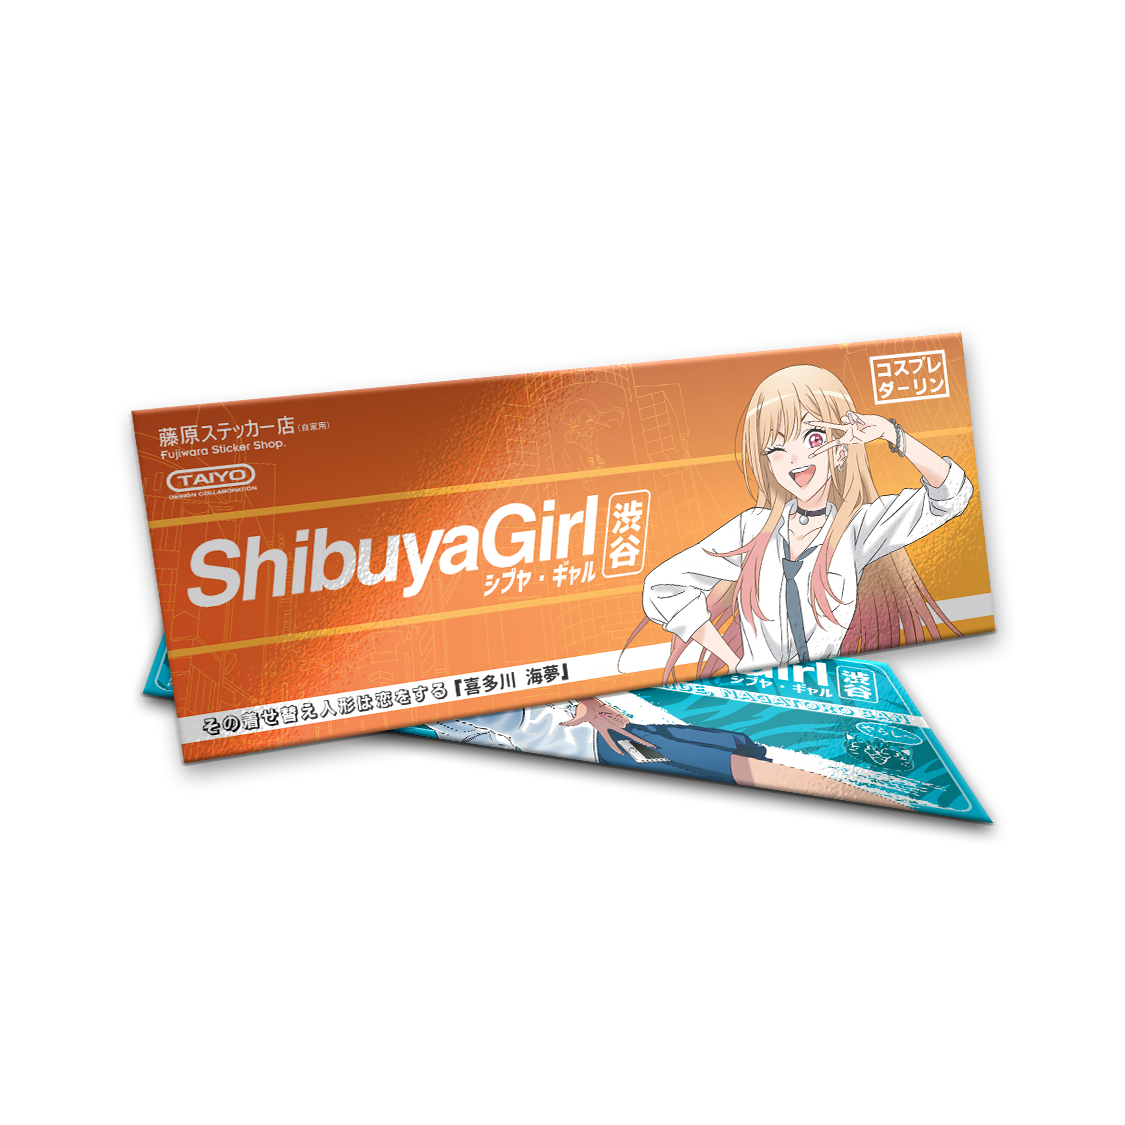 Shibuya Girl